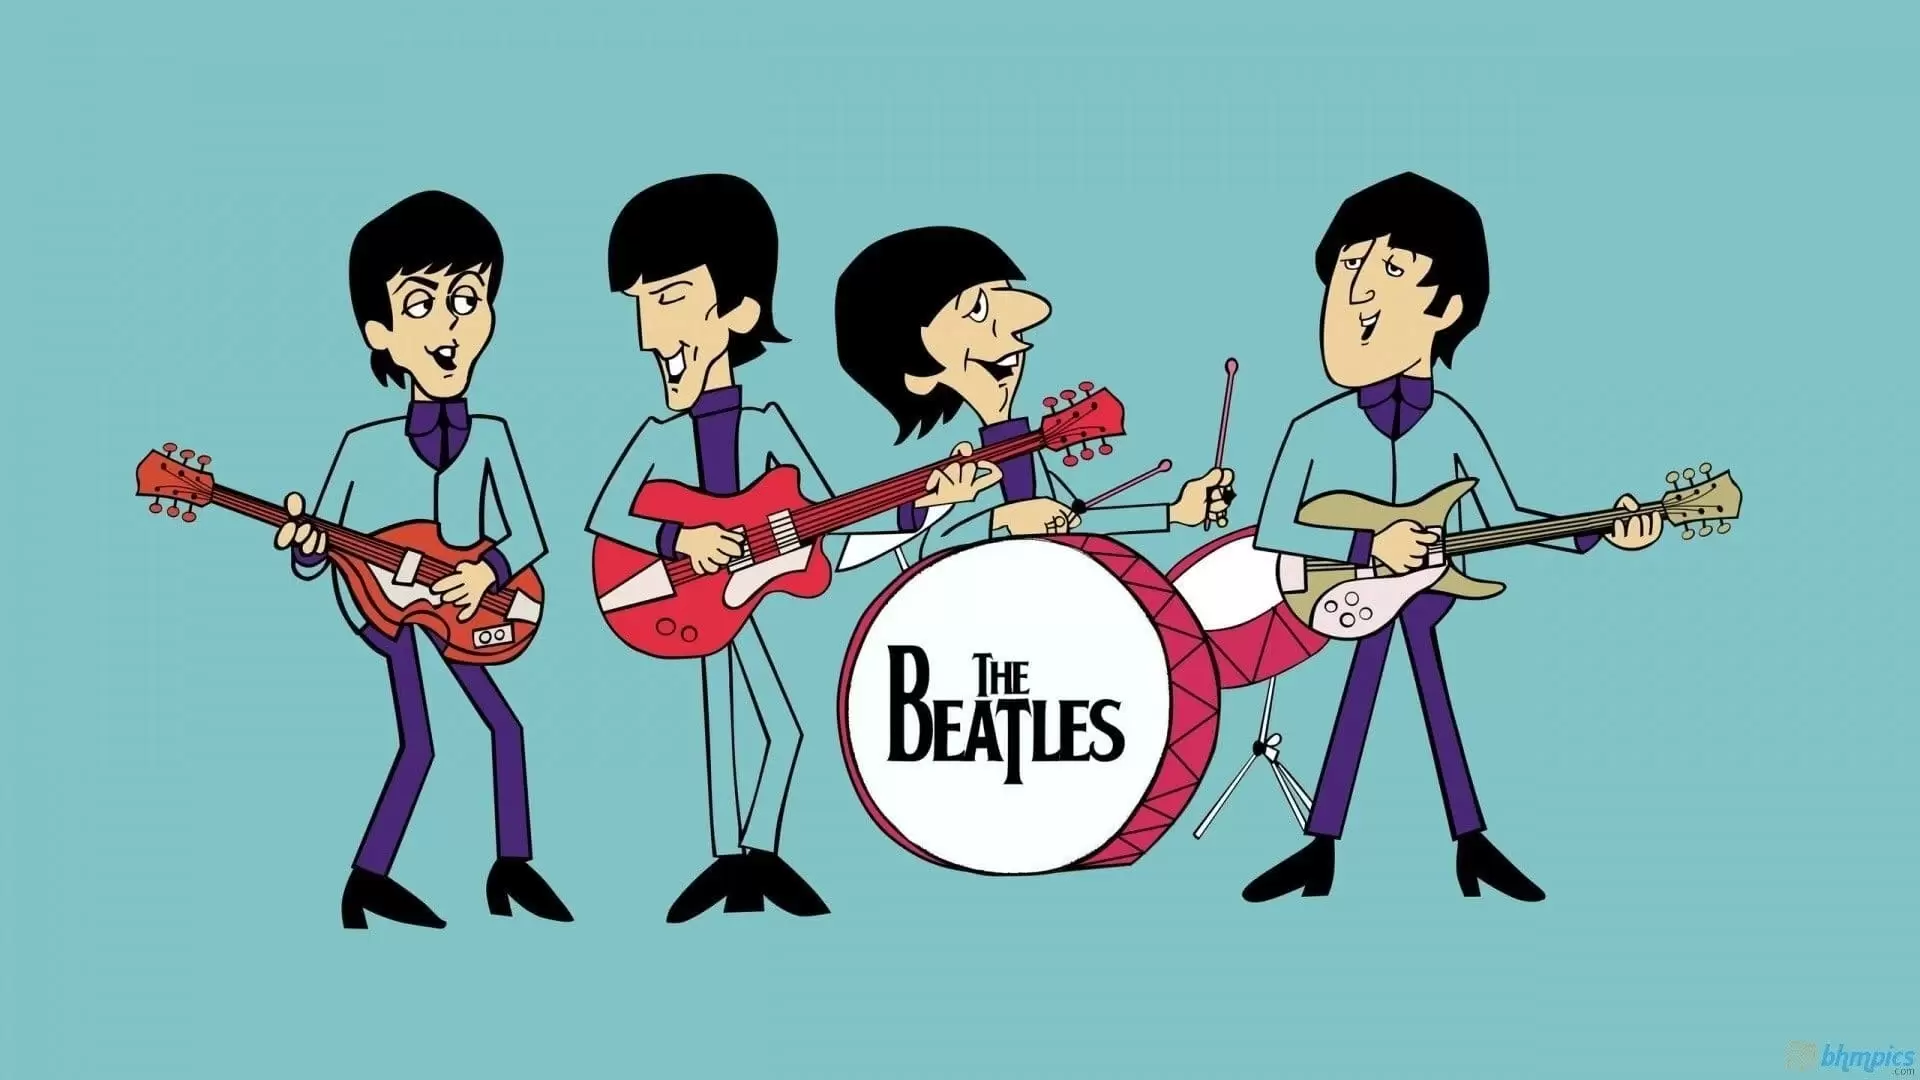 دانلود انیمیشن The Beatles 1965 (بیتلزها)